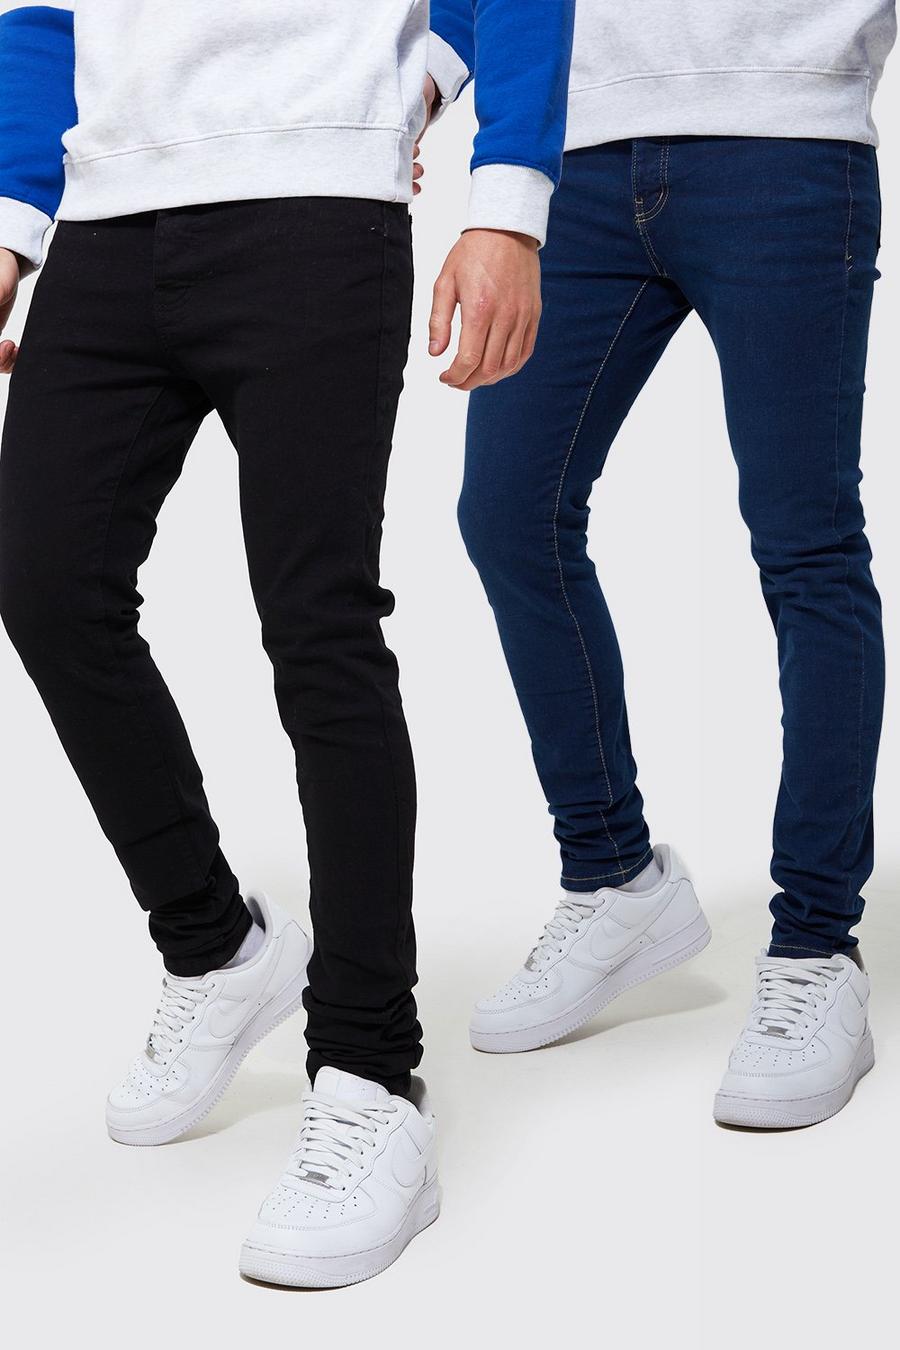 מולטי multicolor מארז 2 מכנסי סקיני ג'ינס